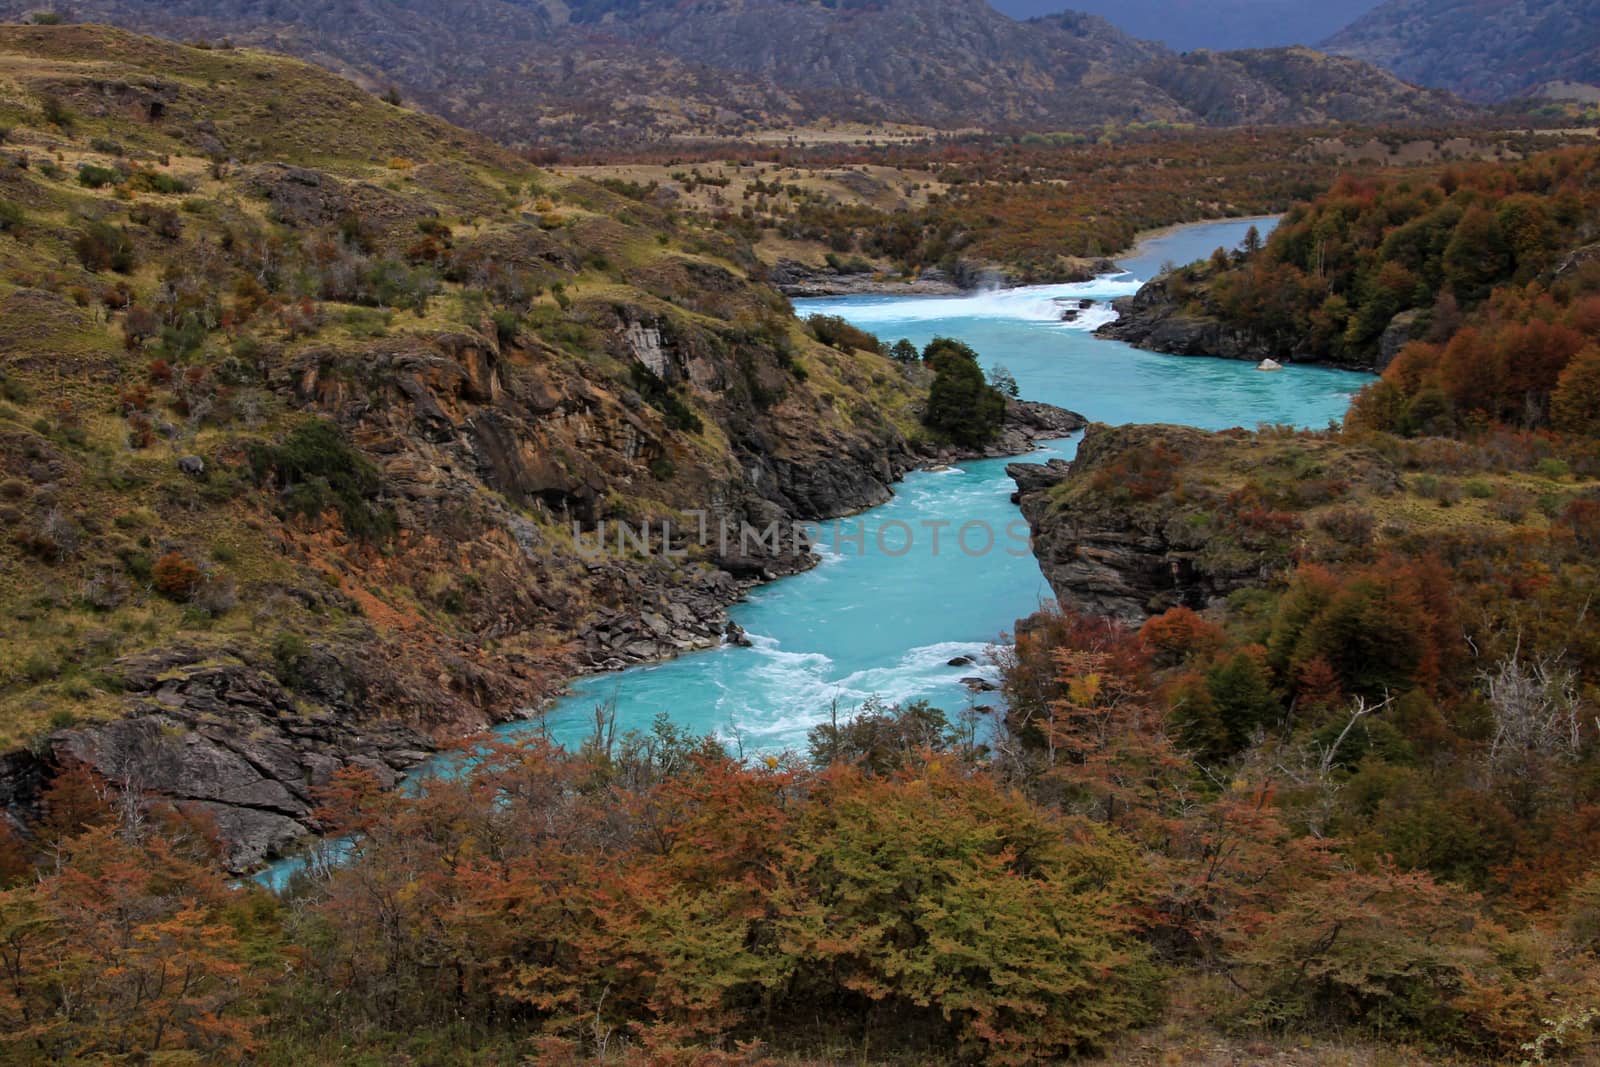 Beautiful nice blue Baker river, Carretera Austral, Patagonia, Chile